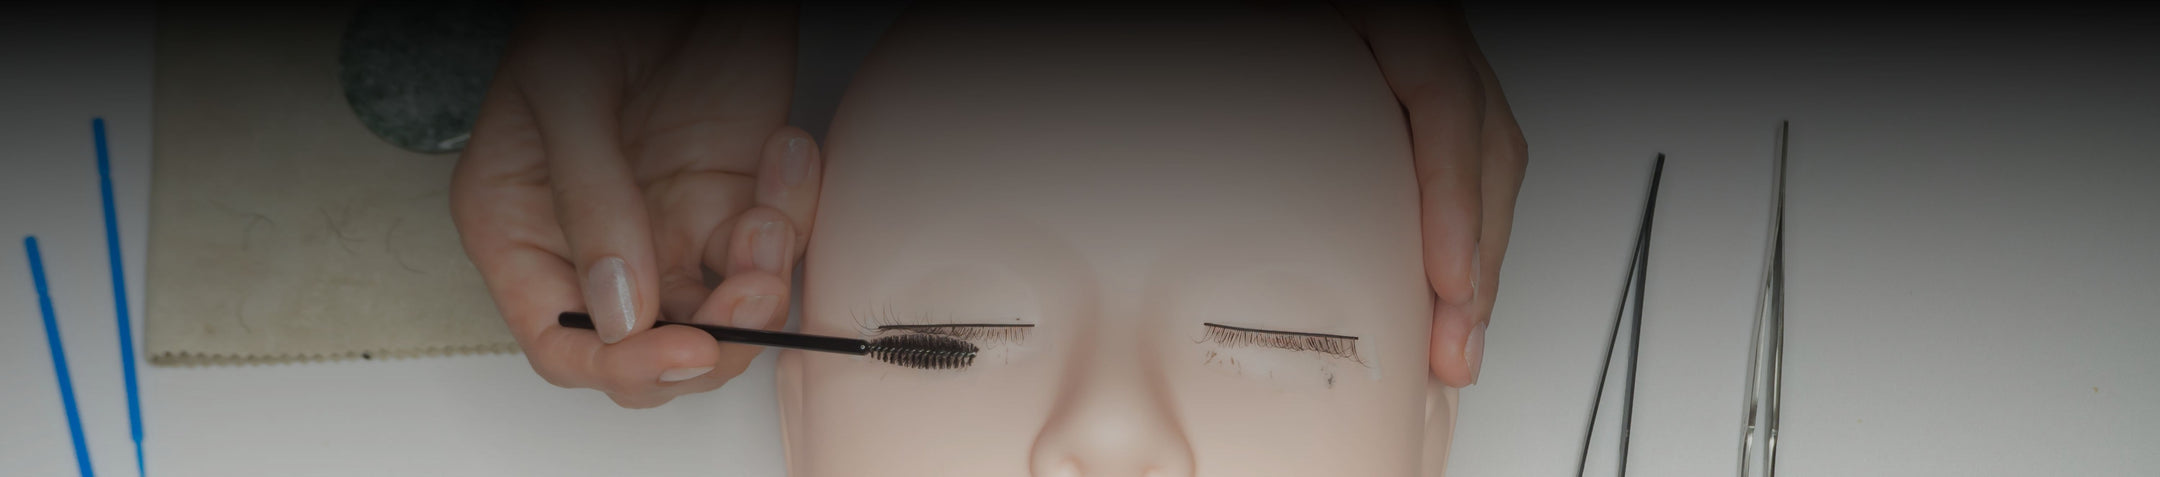 Eyelash Extension Accessories